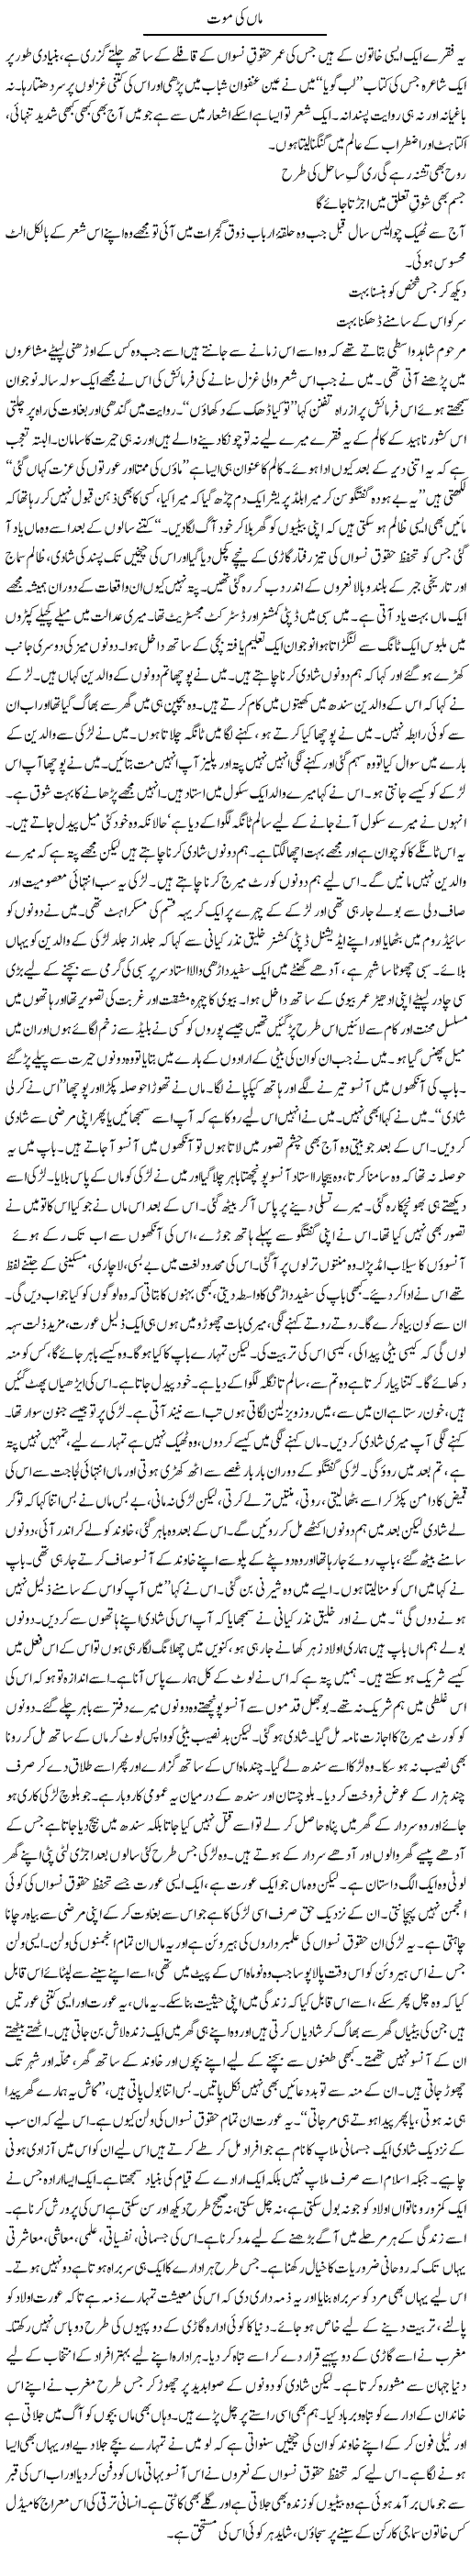 Maan Ki Maut | Orya Maqbool Jan | Daily Urdu Columns